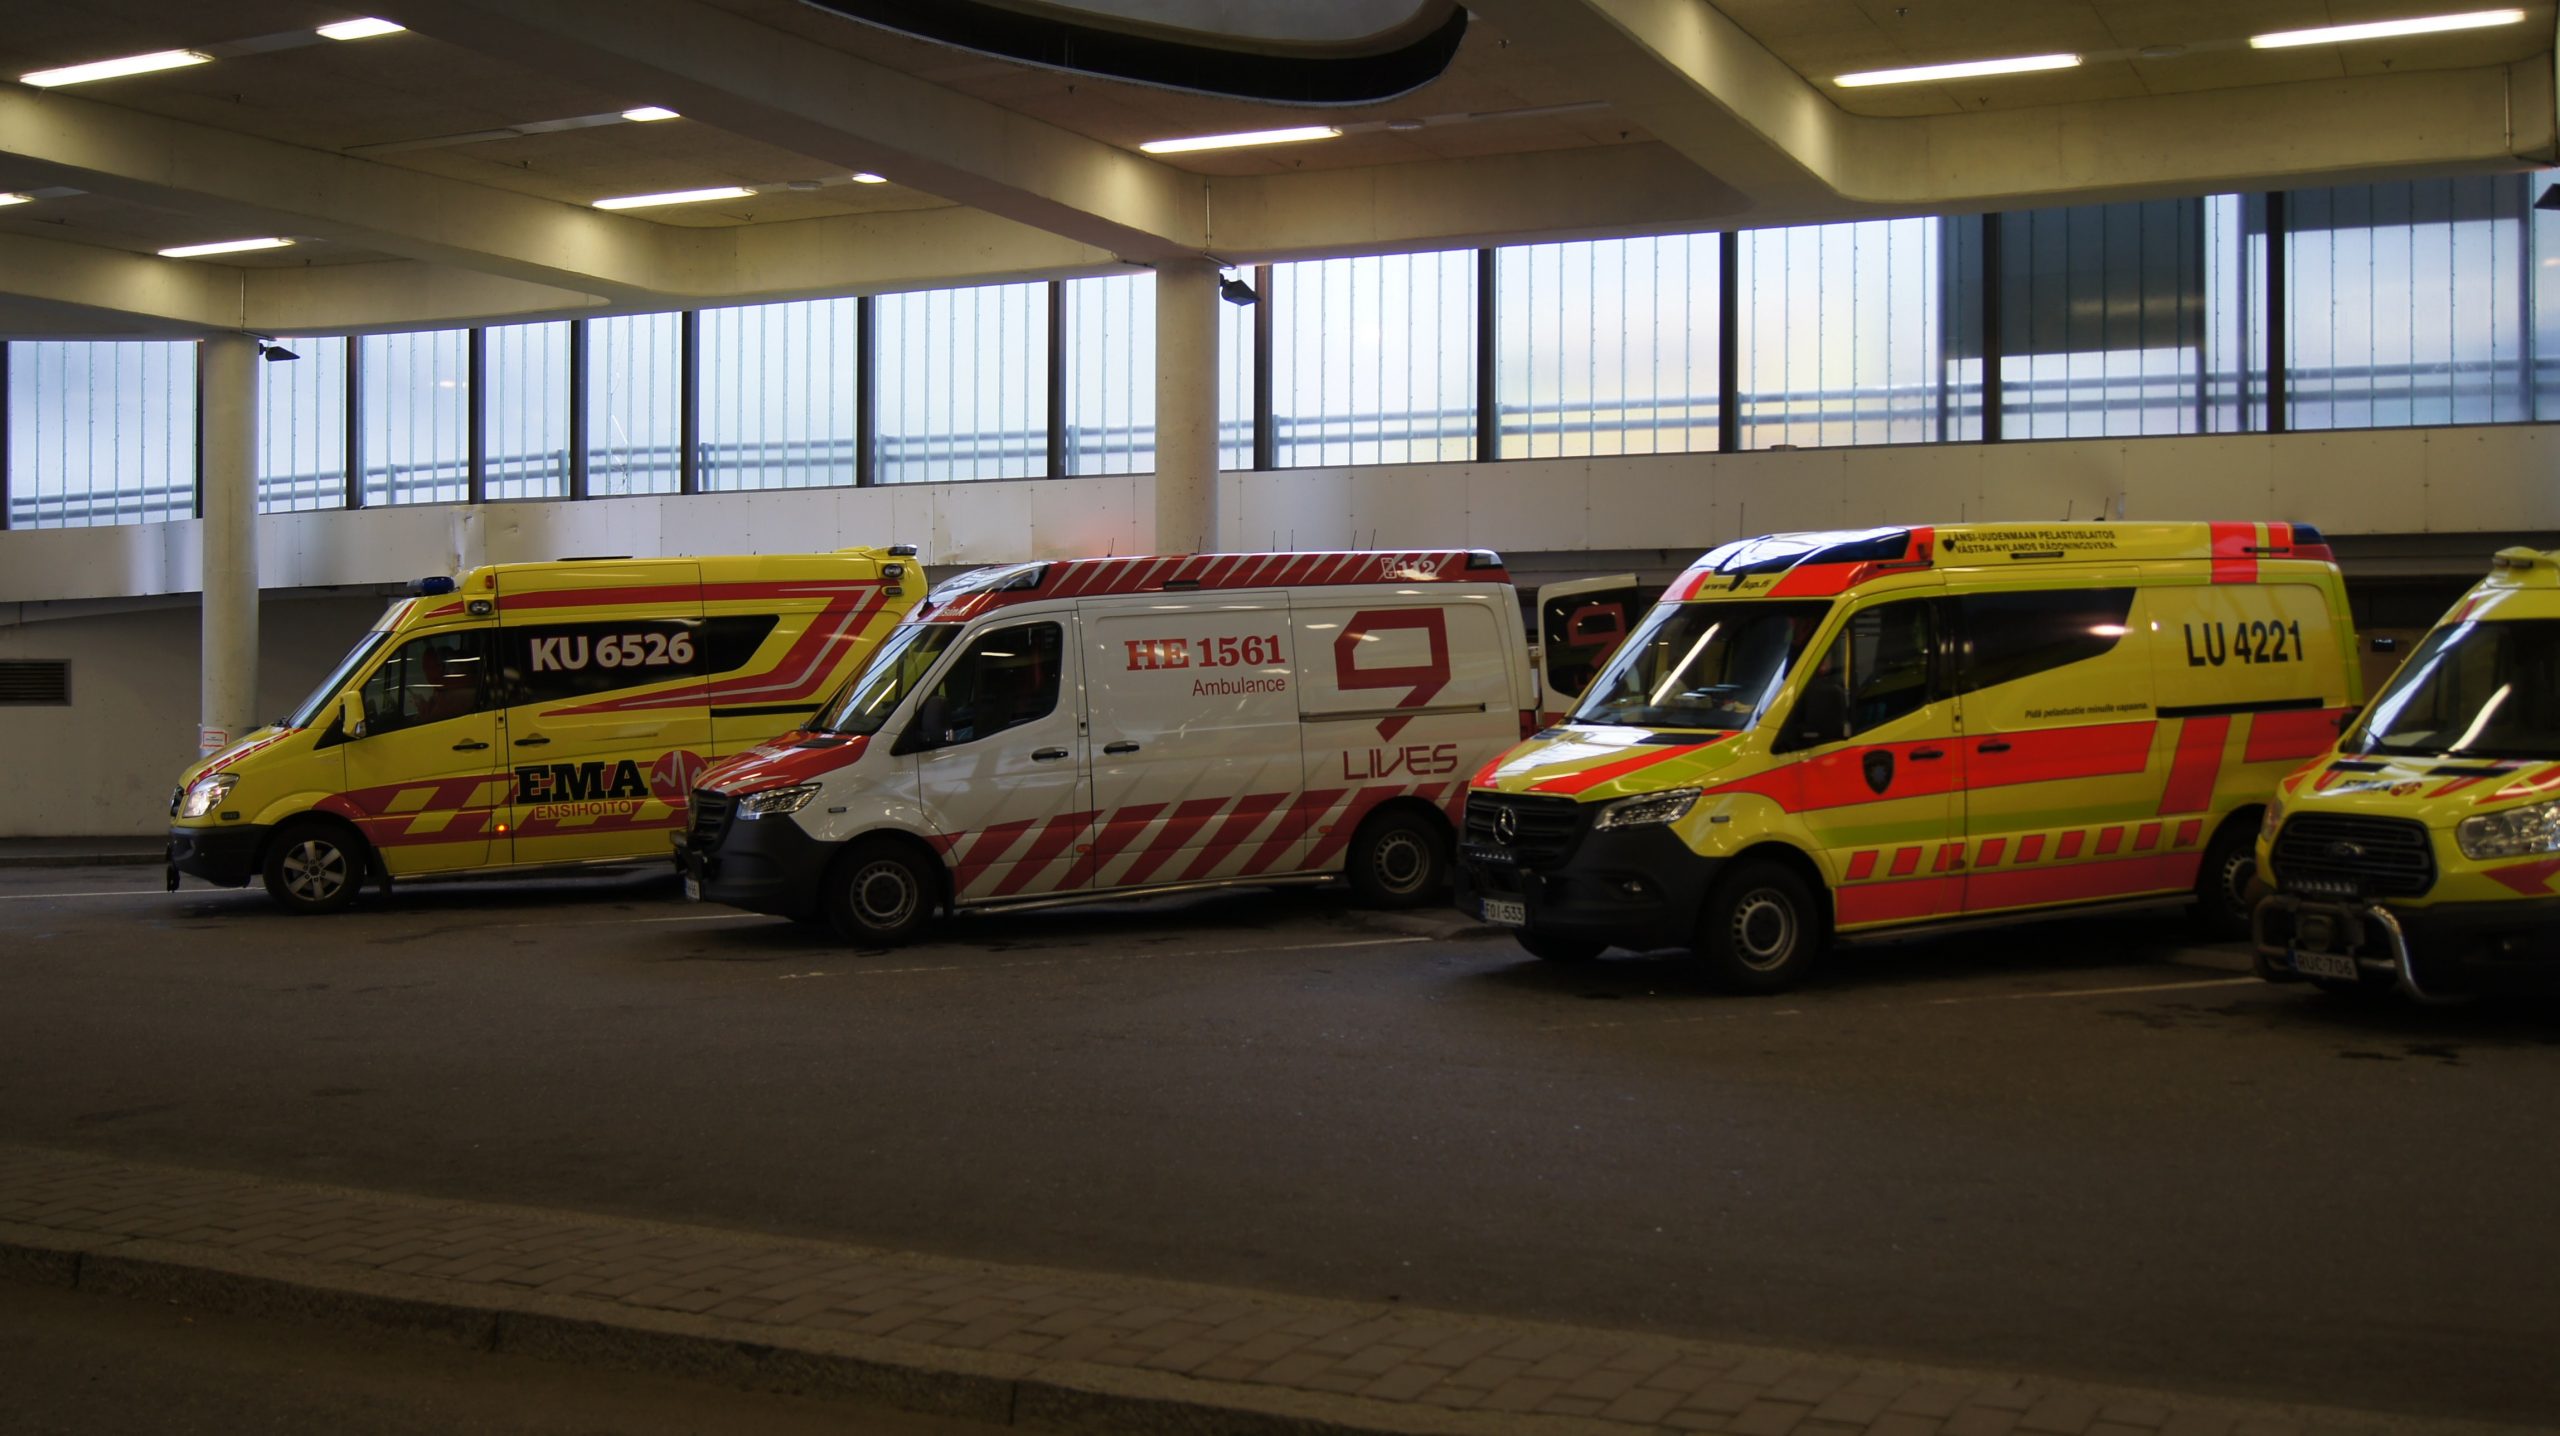 Kolme ambulanssia parkissa.